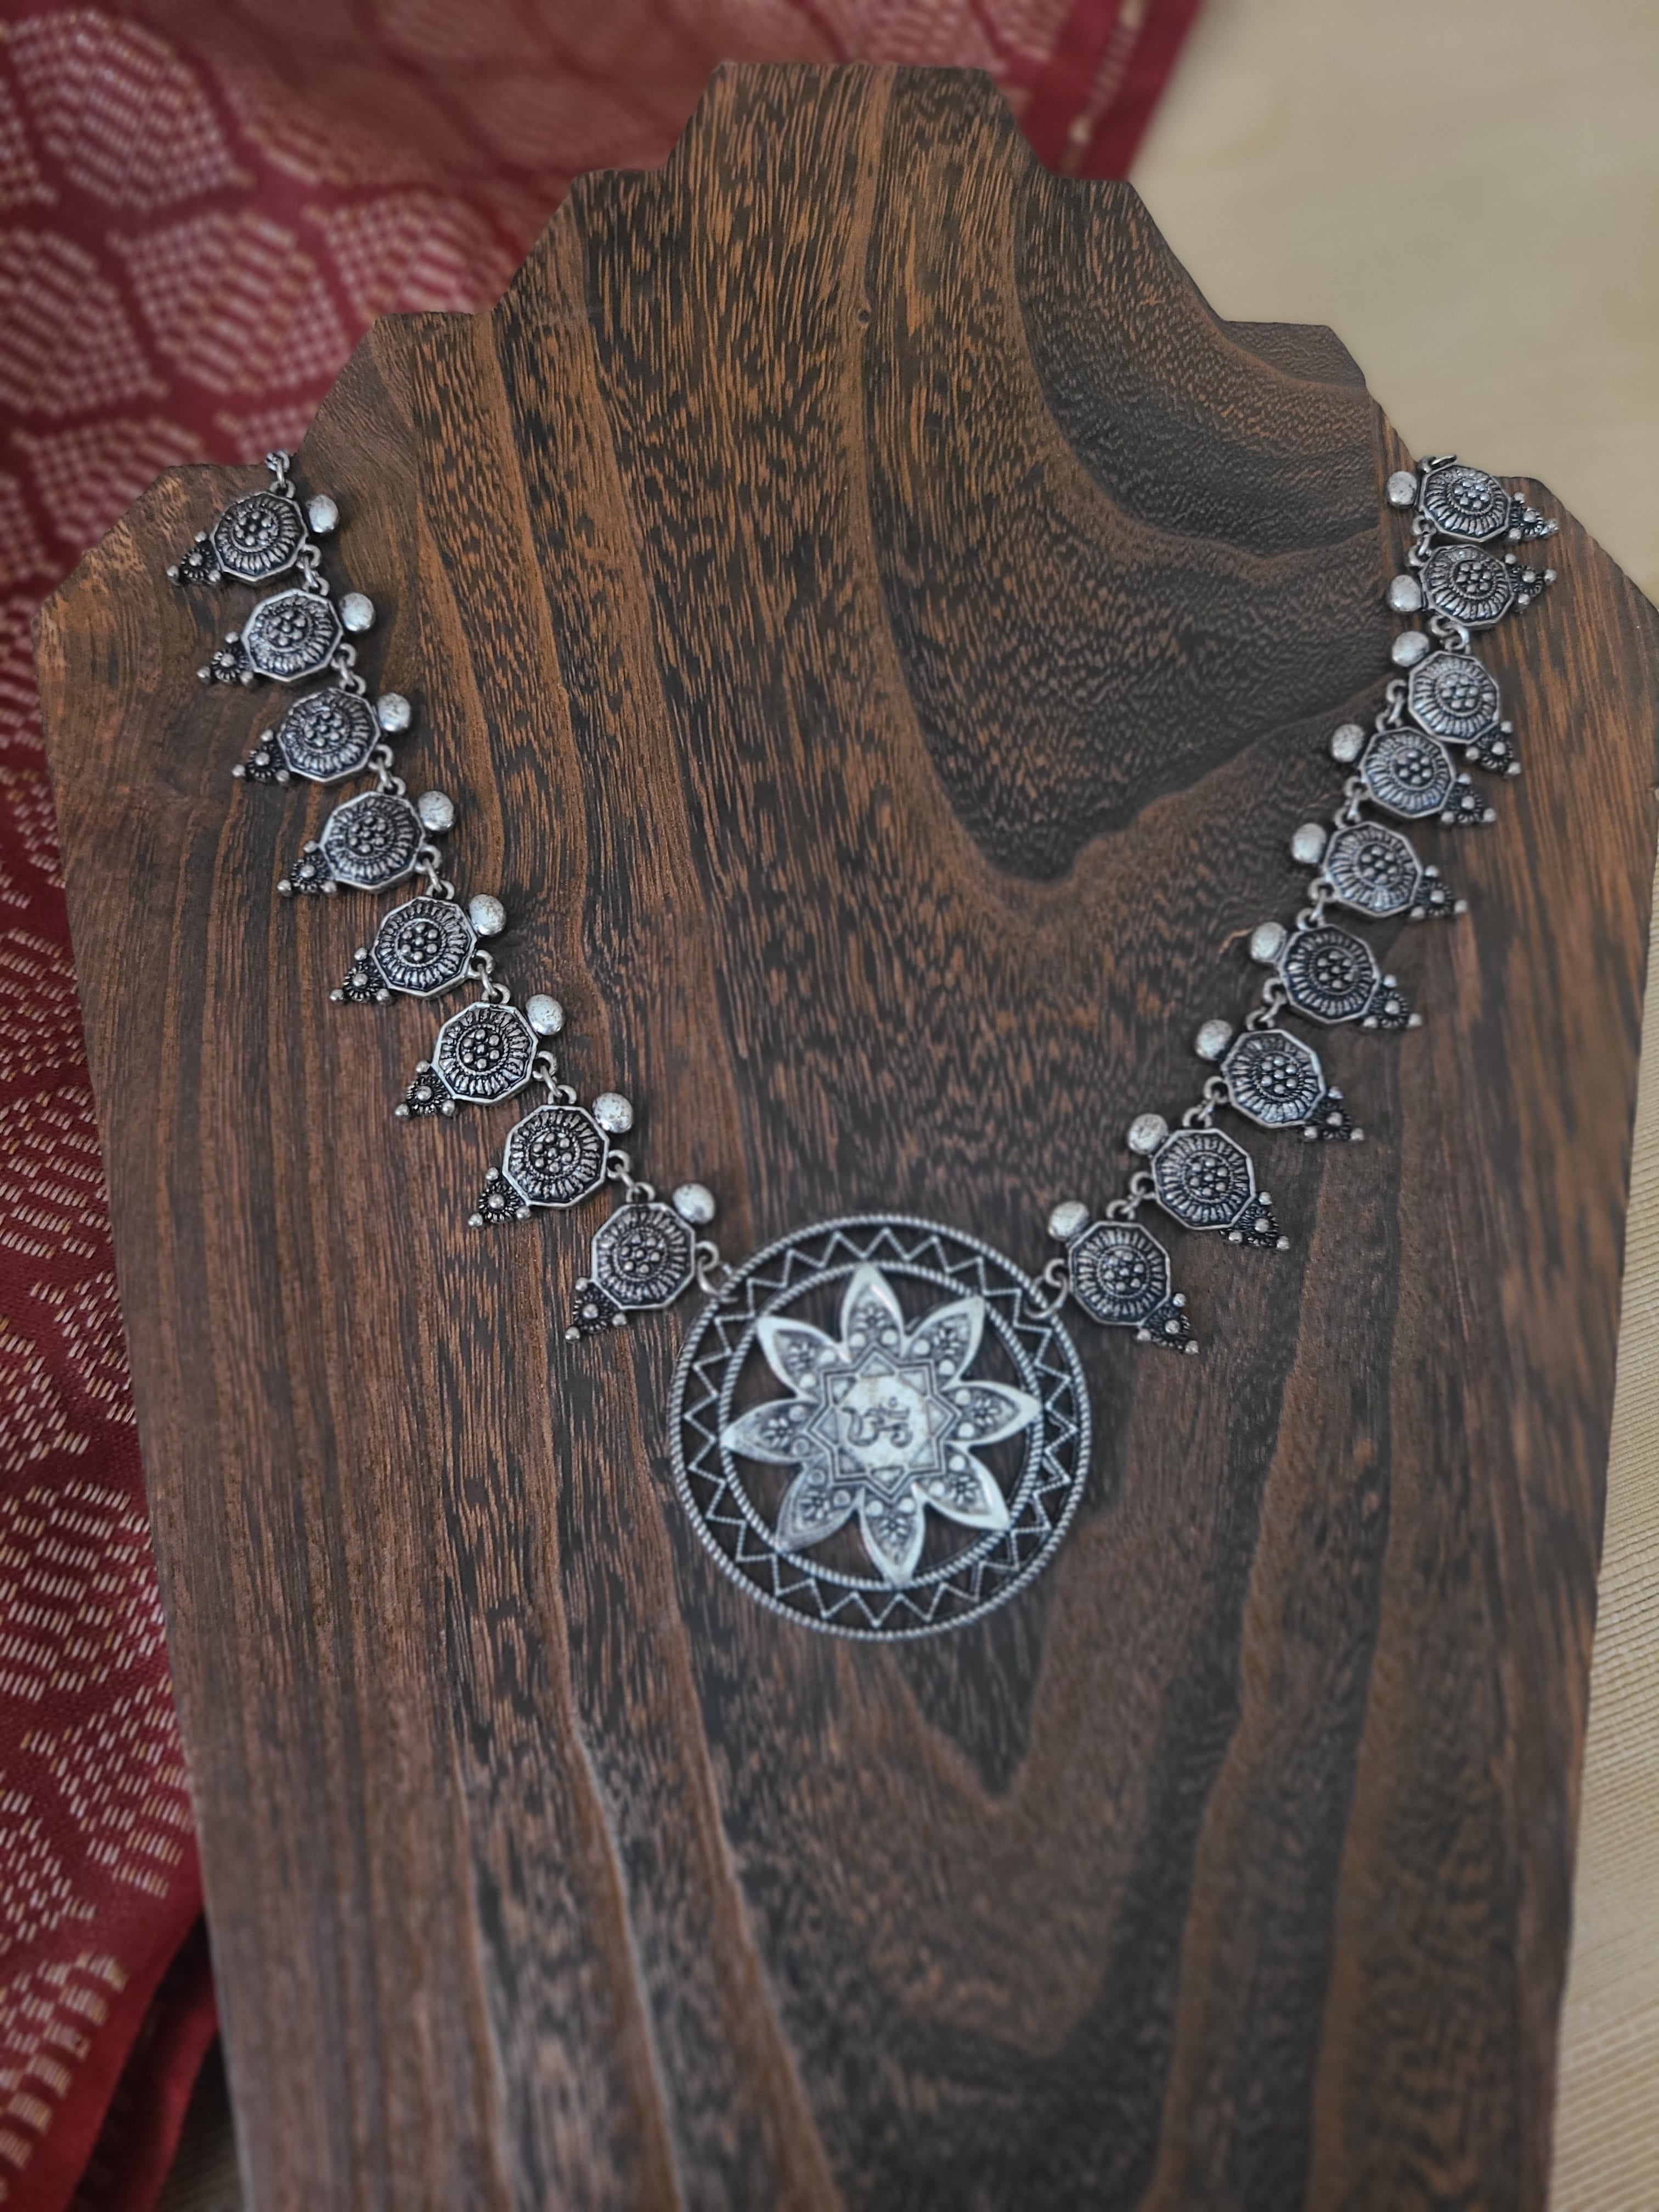 Oxidized handmade necklace